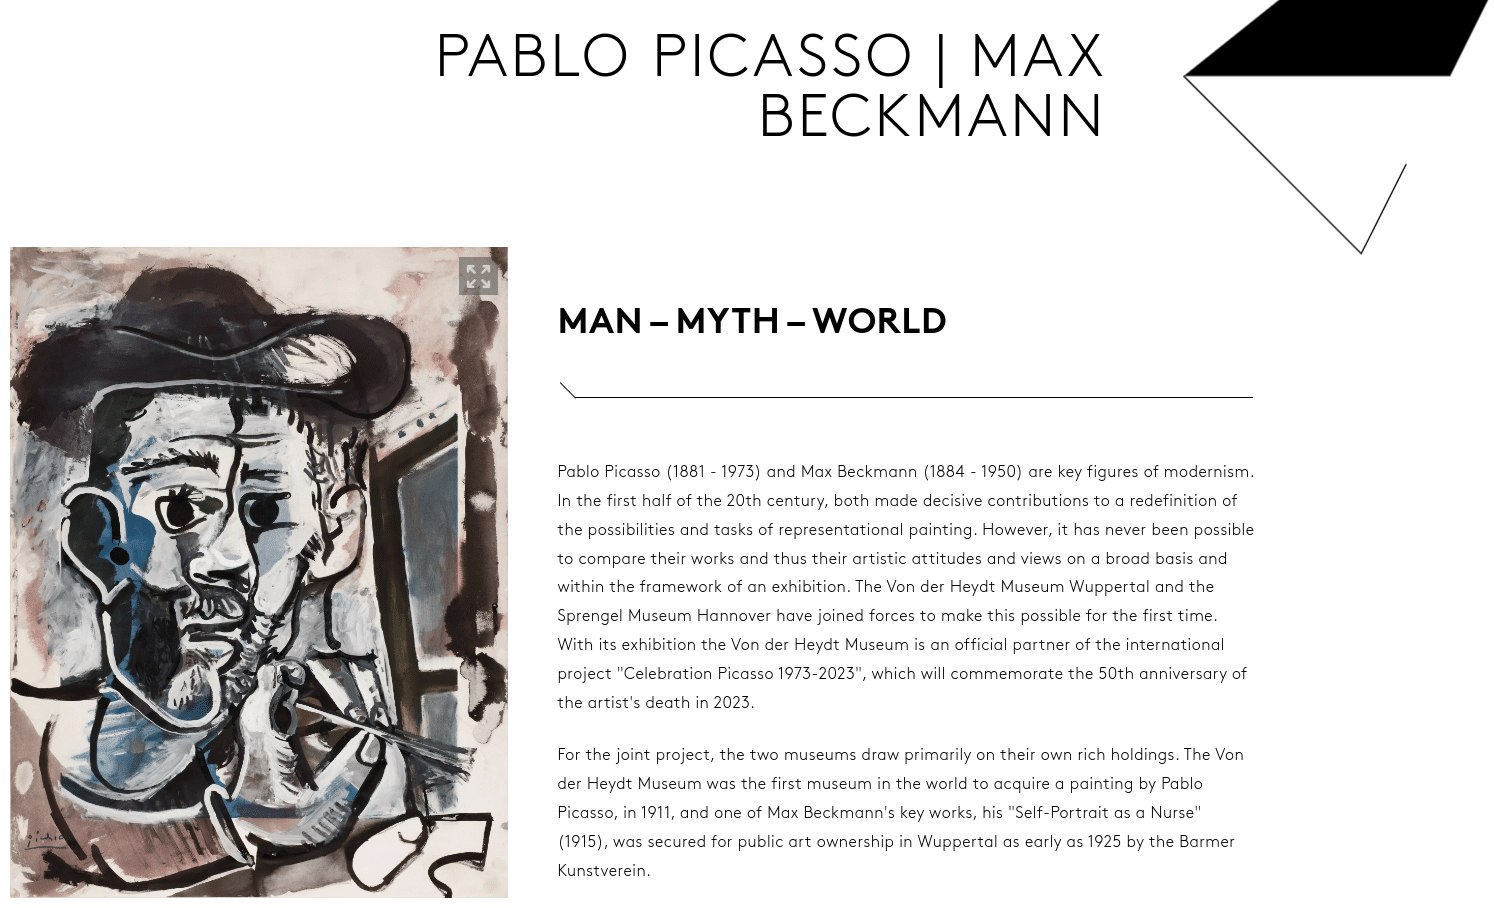 [29-Dec-23] PABLO PICASSO | MAX BECKMANN exhibition